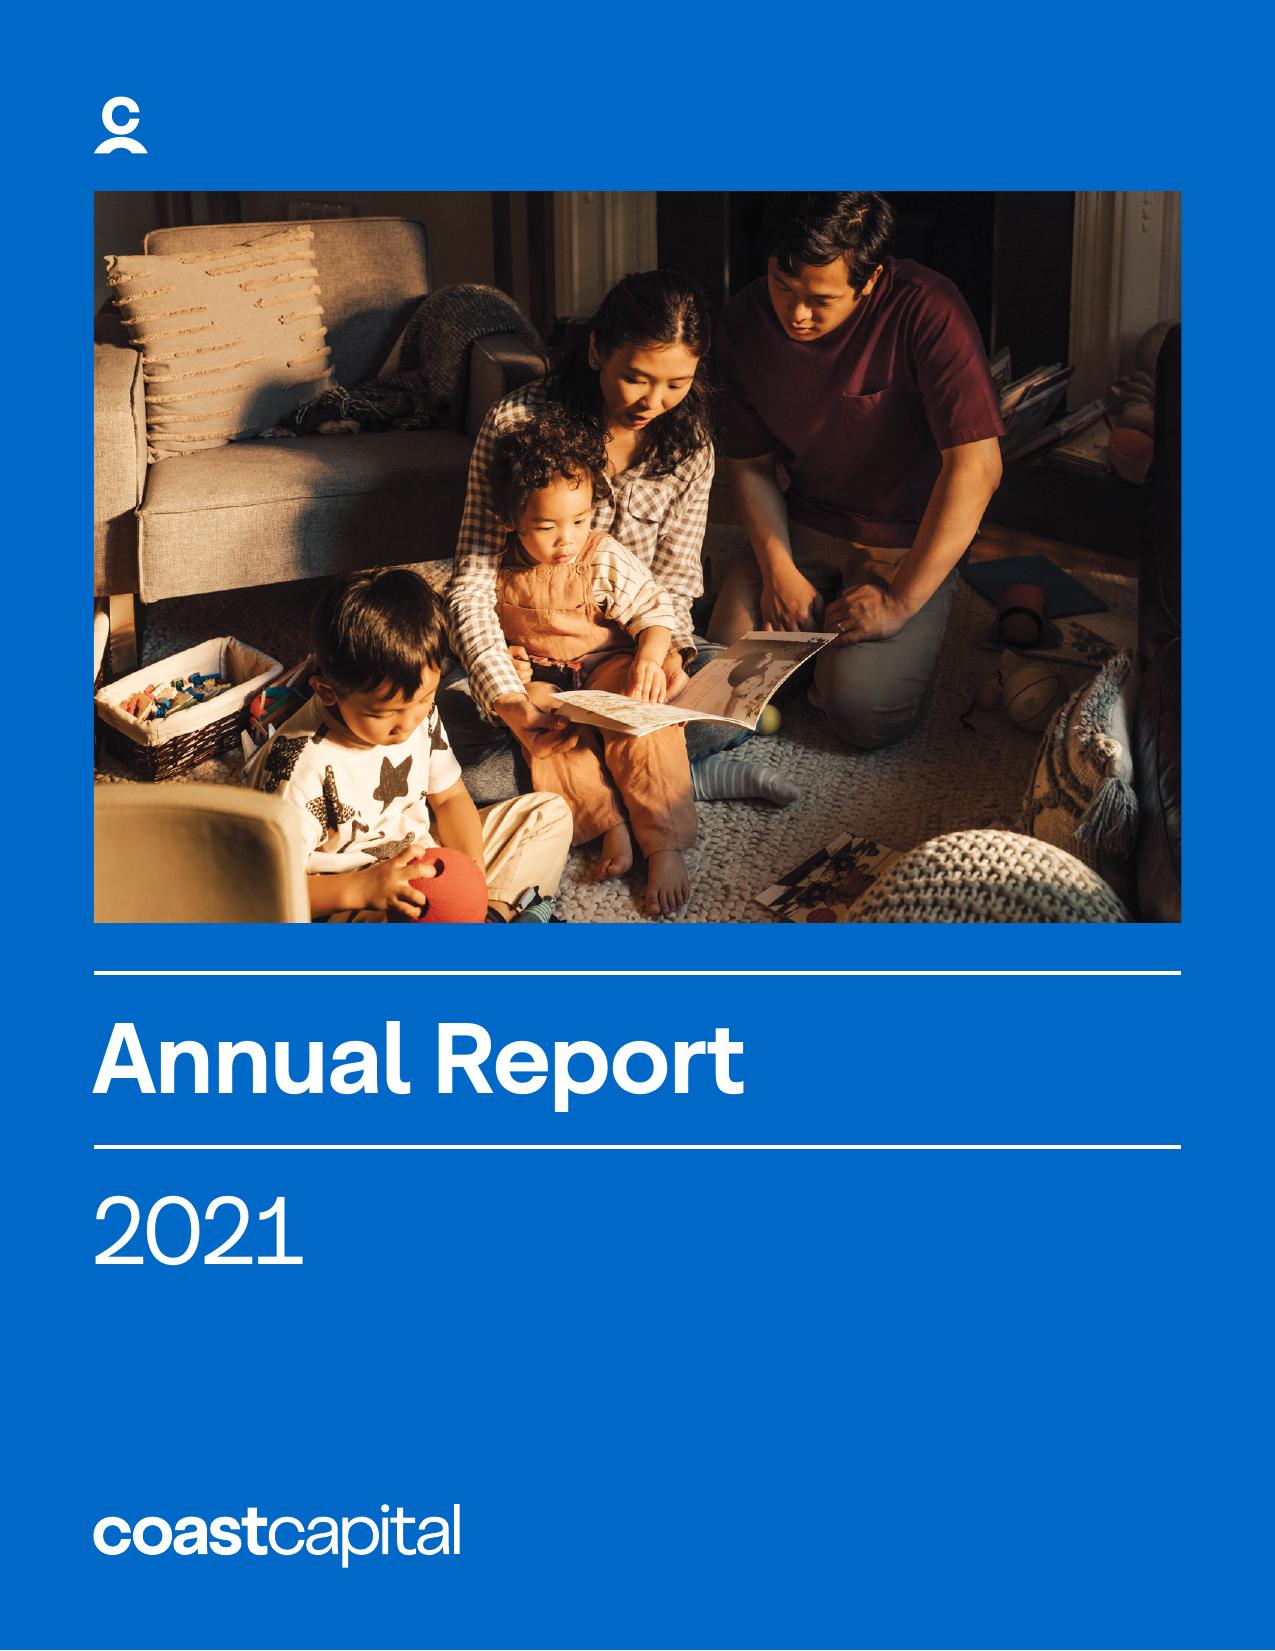 BANKOFAMERICA 2021 Annual Report